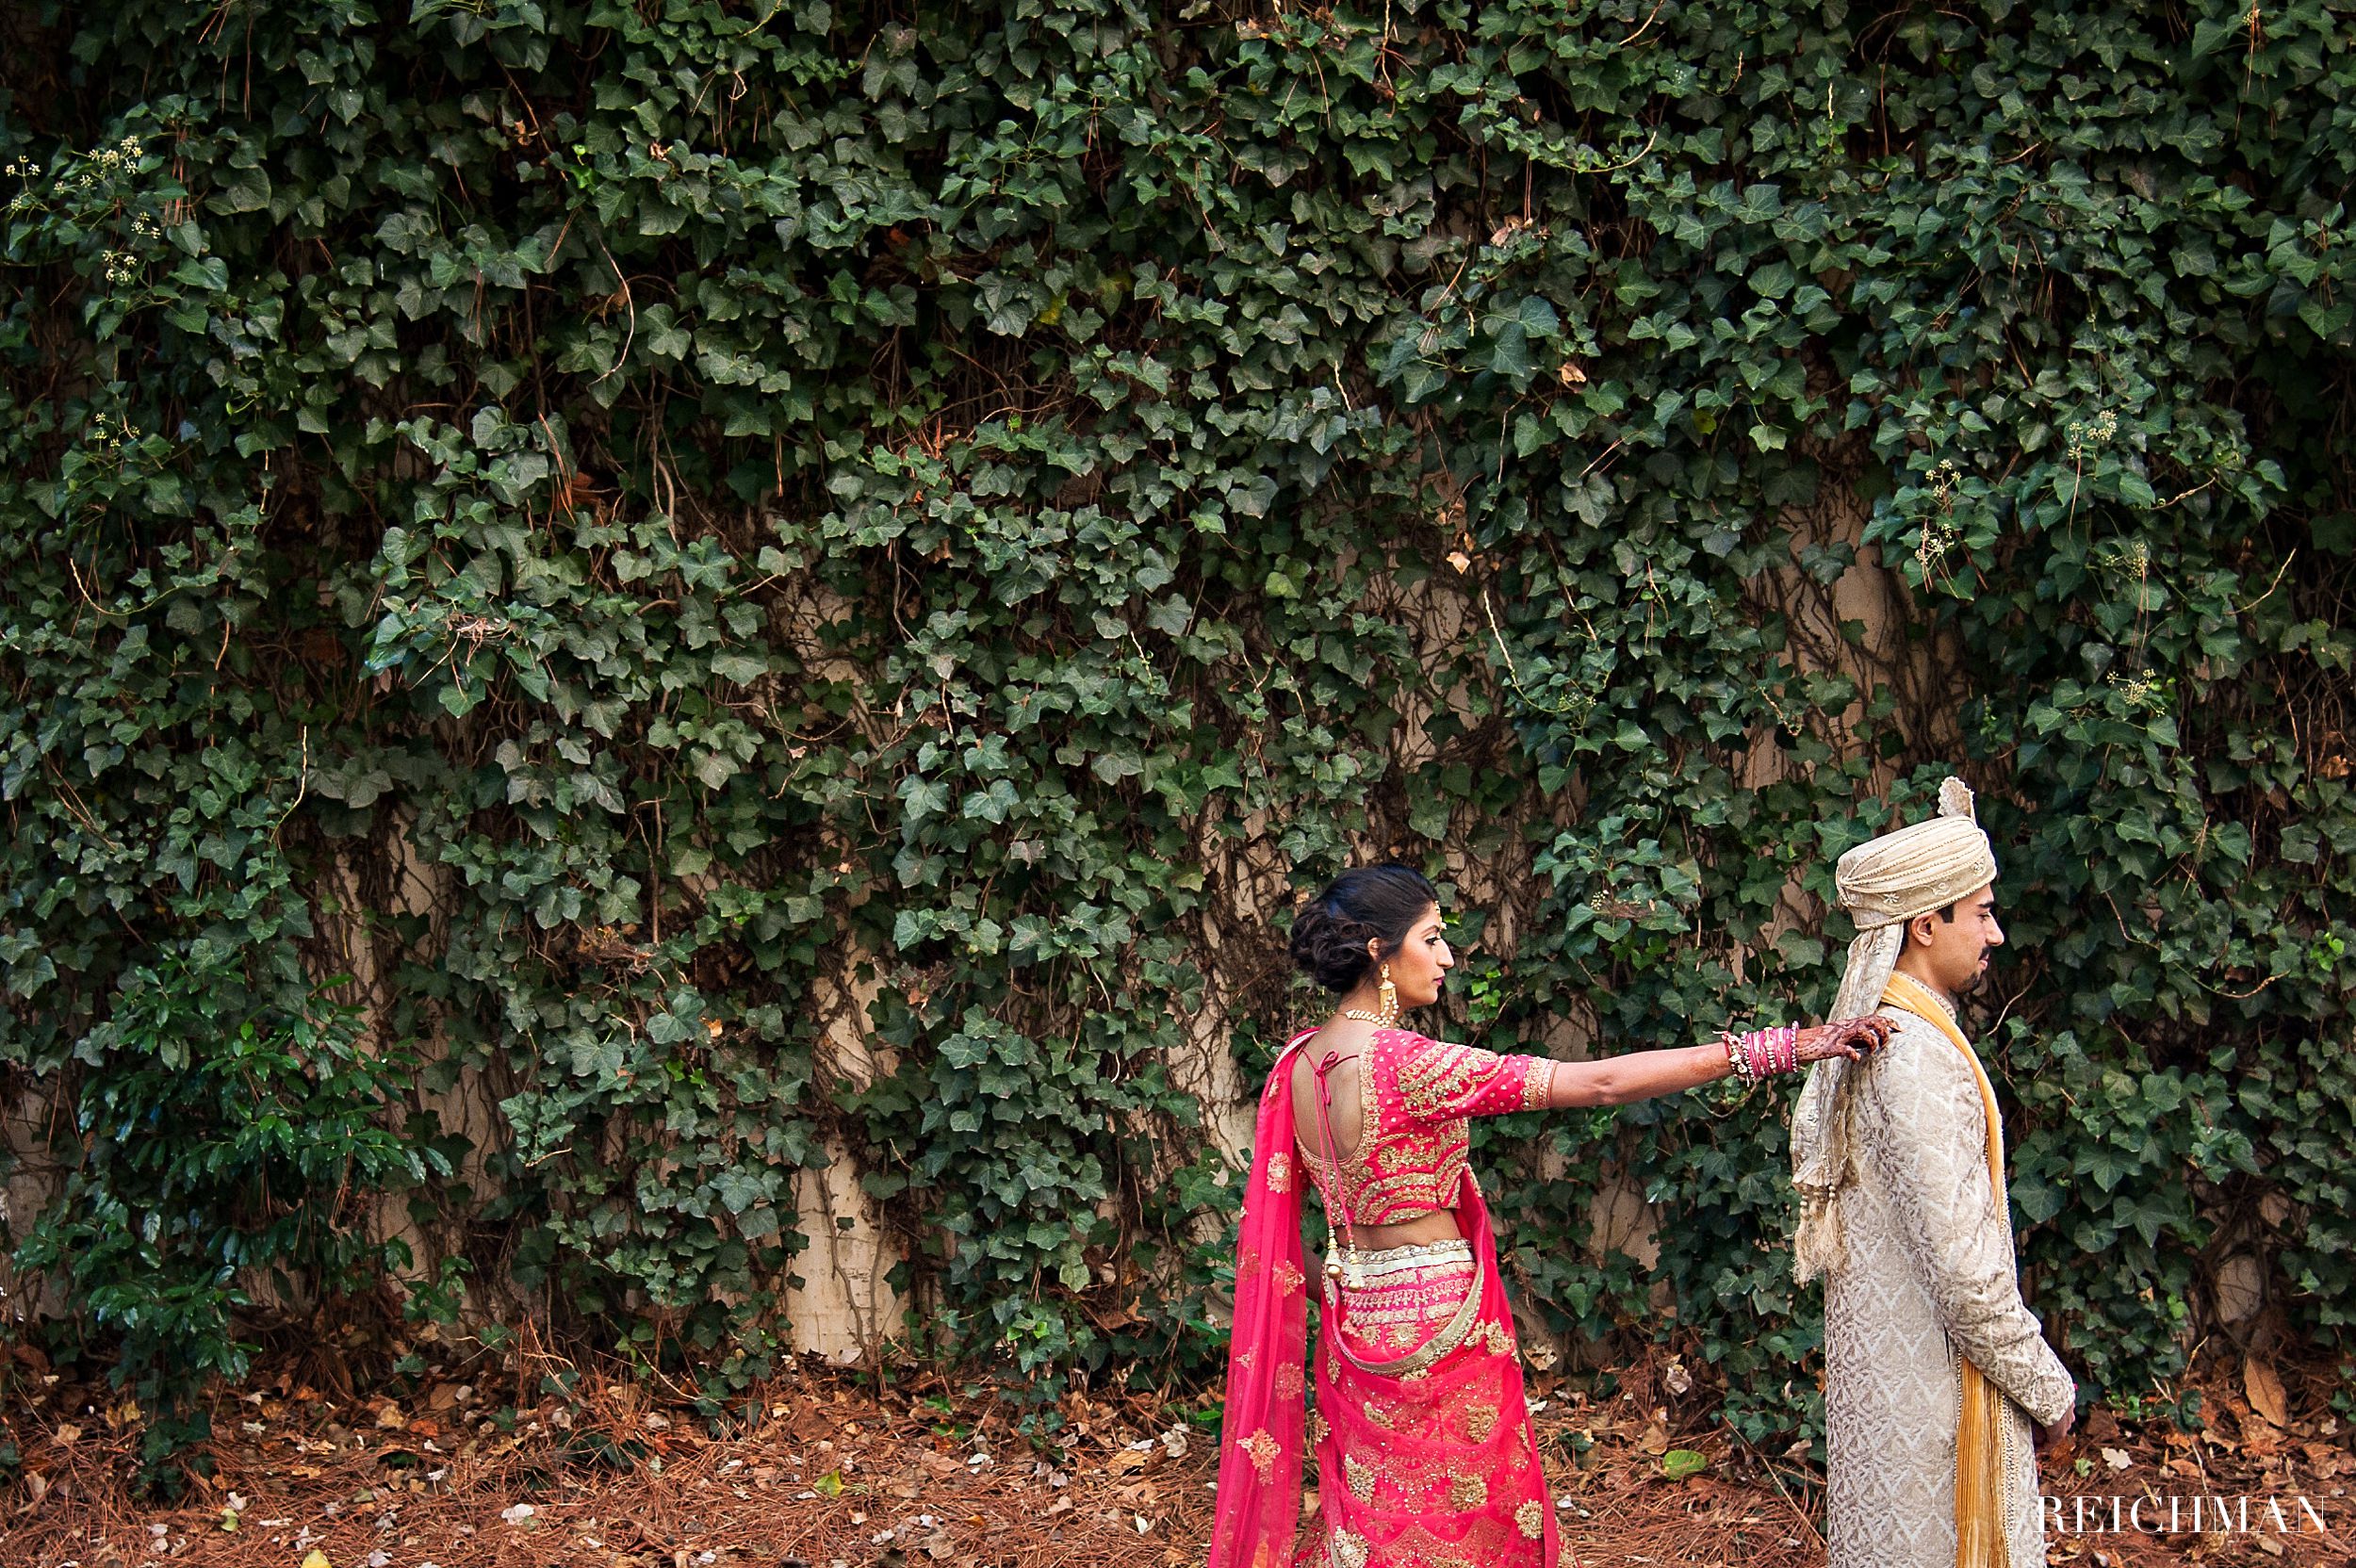 016st-regis-atlanta-hindu-wedding-016